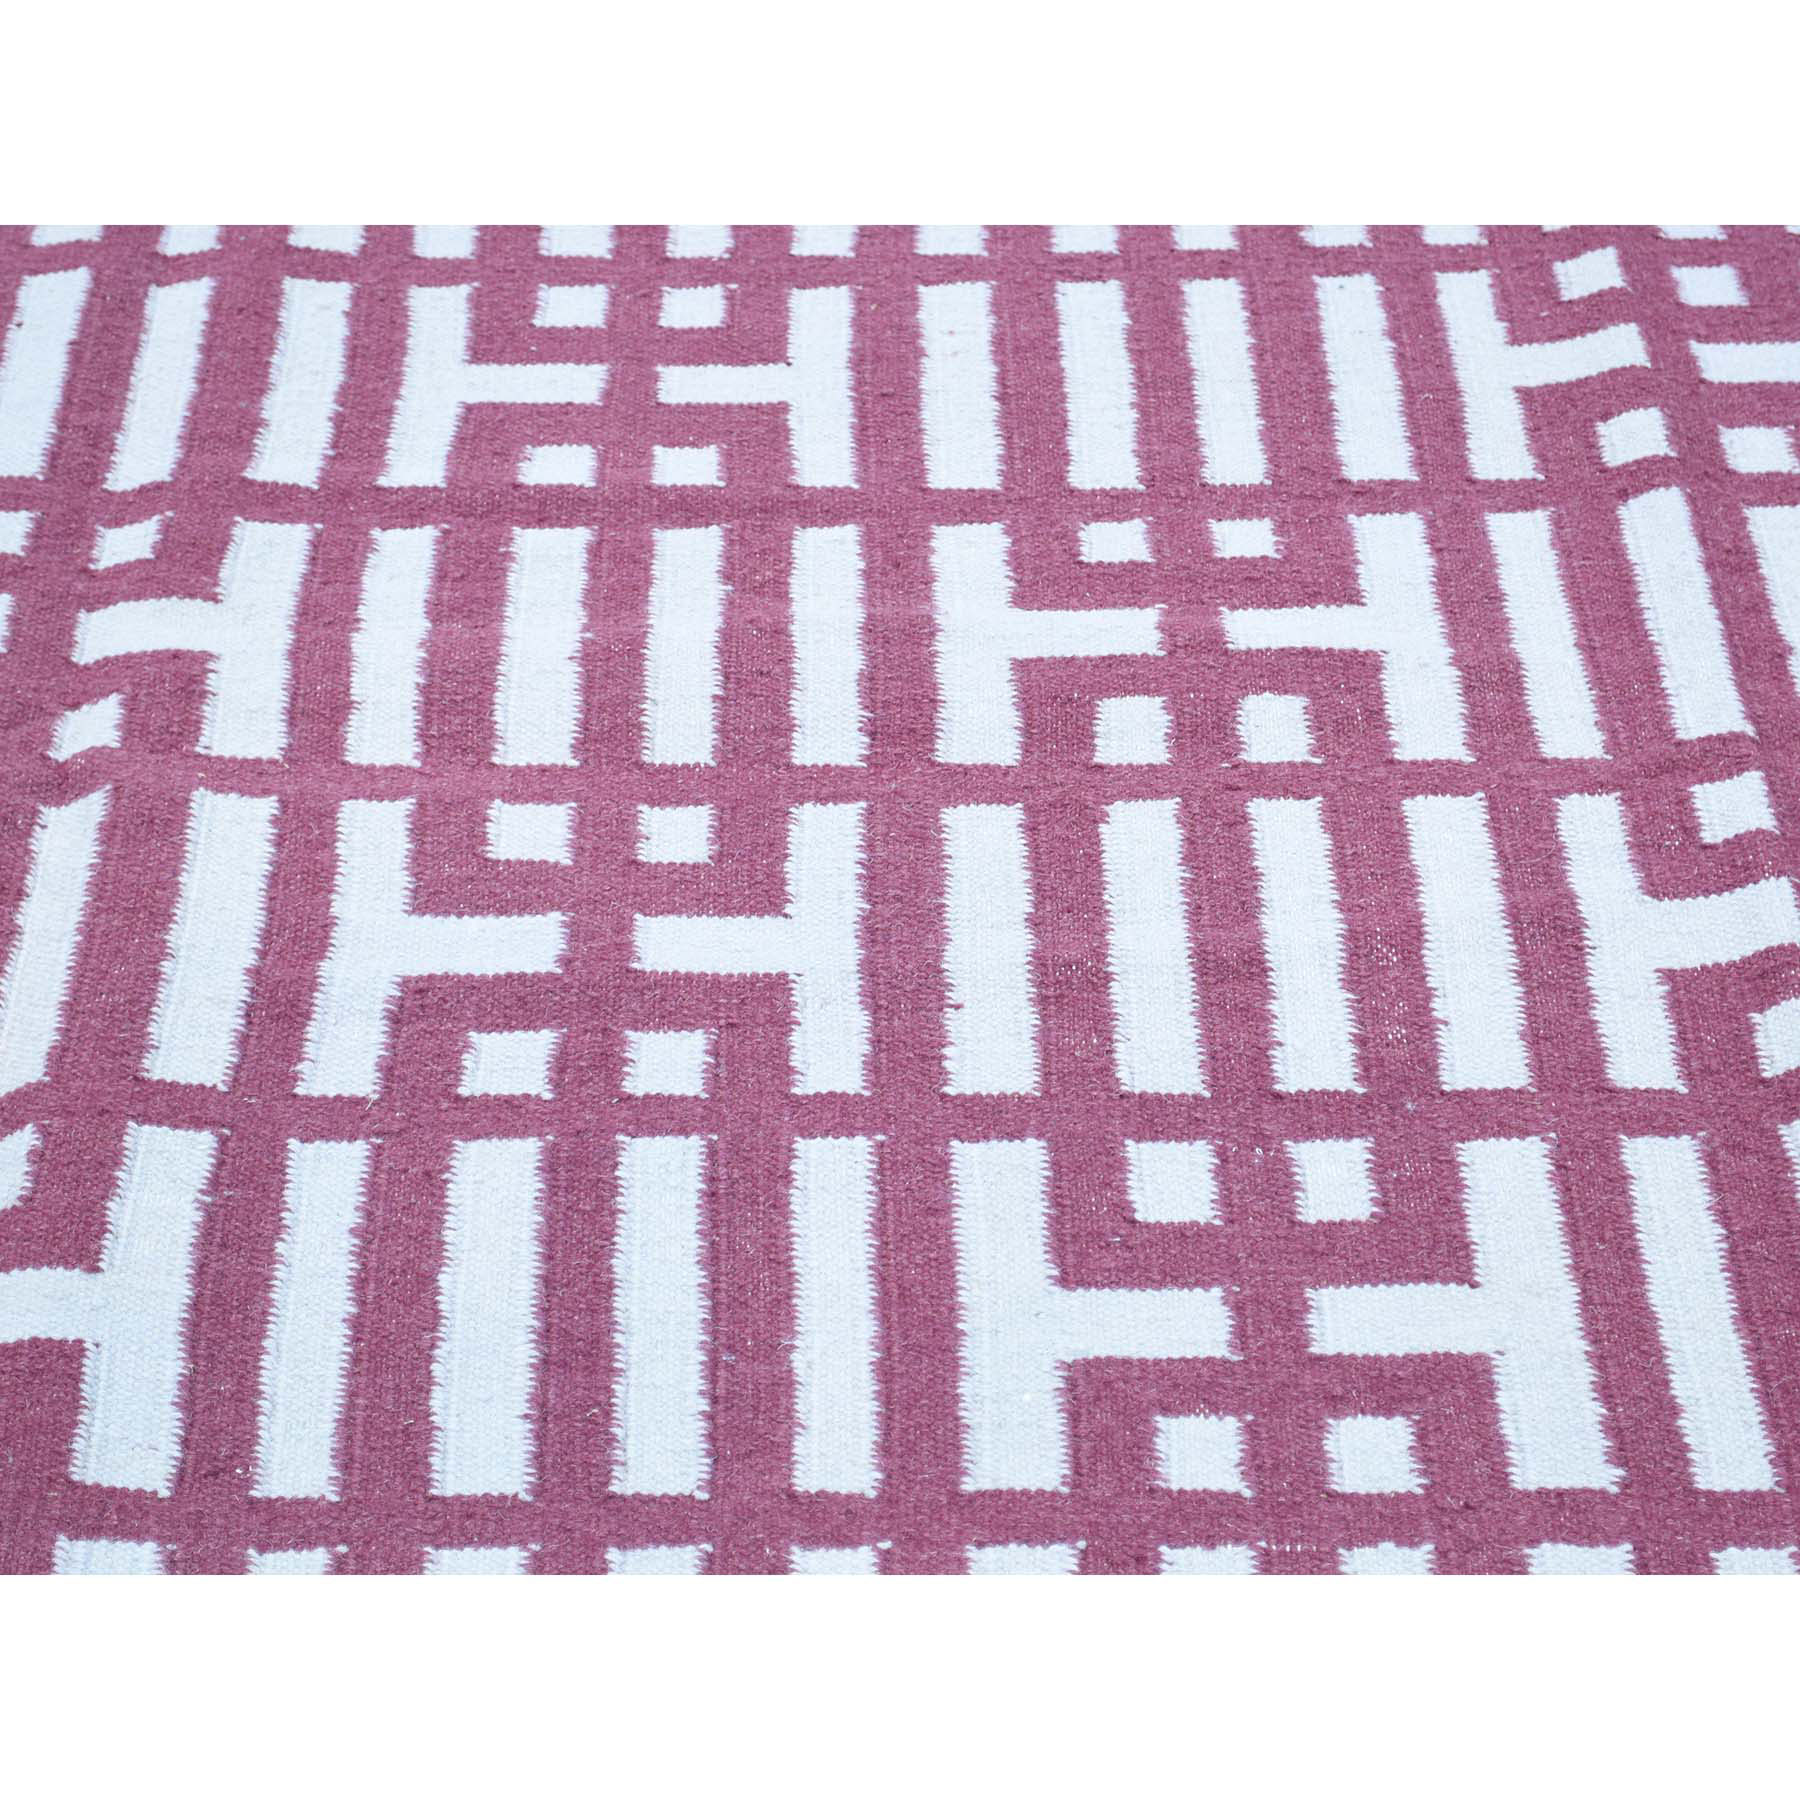 9-1 x12-2  Flat Weave Pure Wool Hand-Woven Reversible Kilim Oriental Rug 